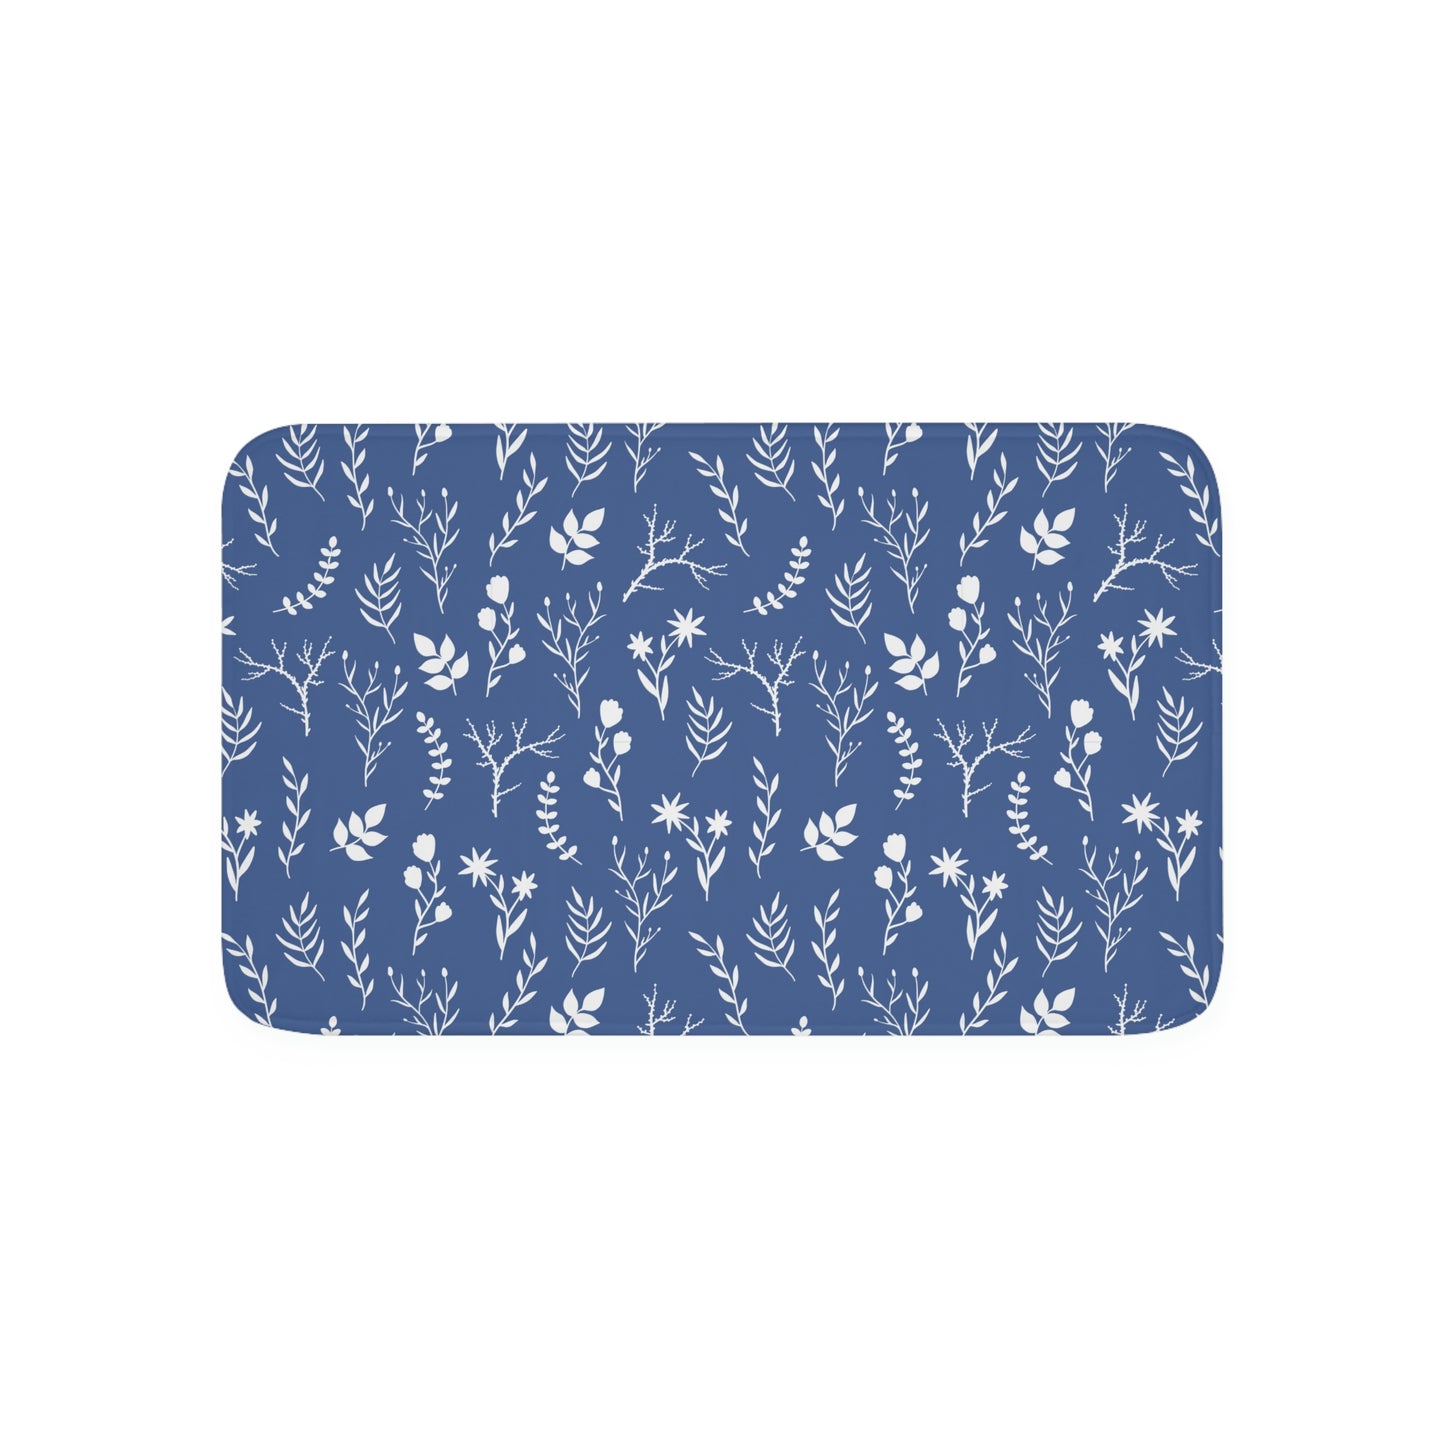 Indigo Blue and White Floral Print Bathmat | Blue Bathroom Bathmat